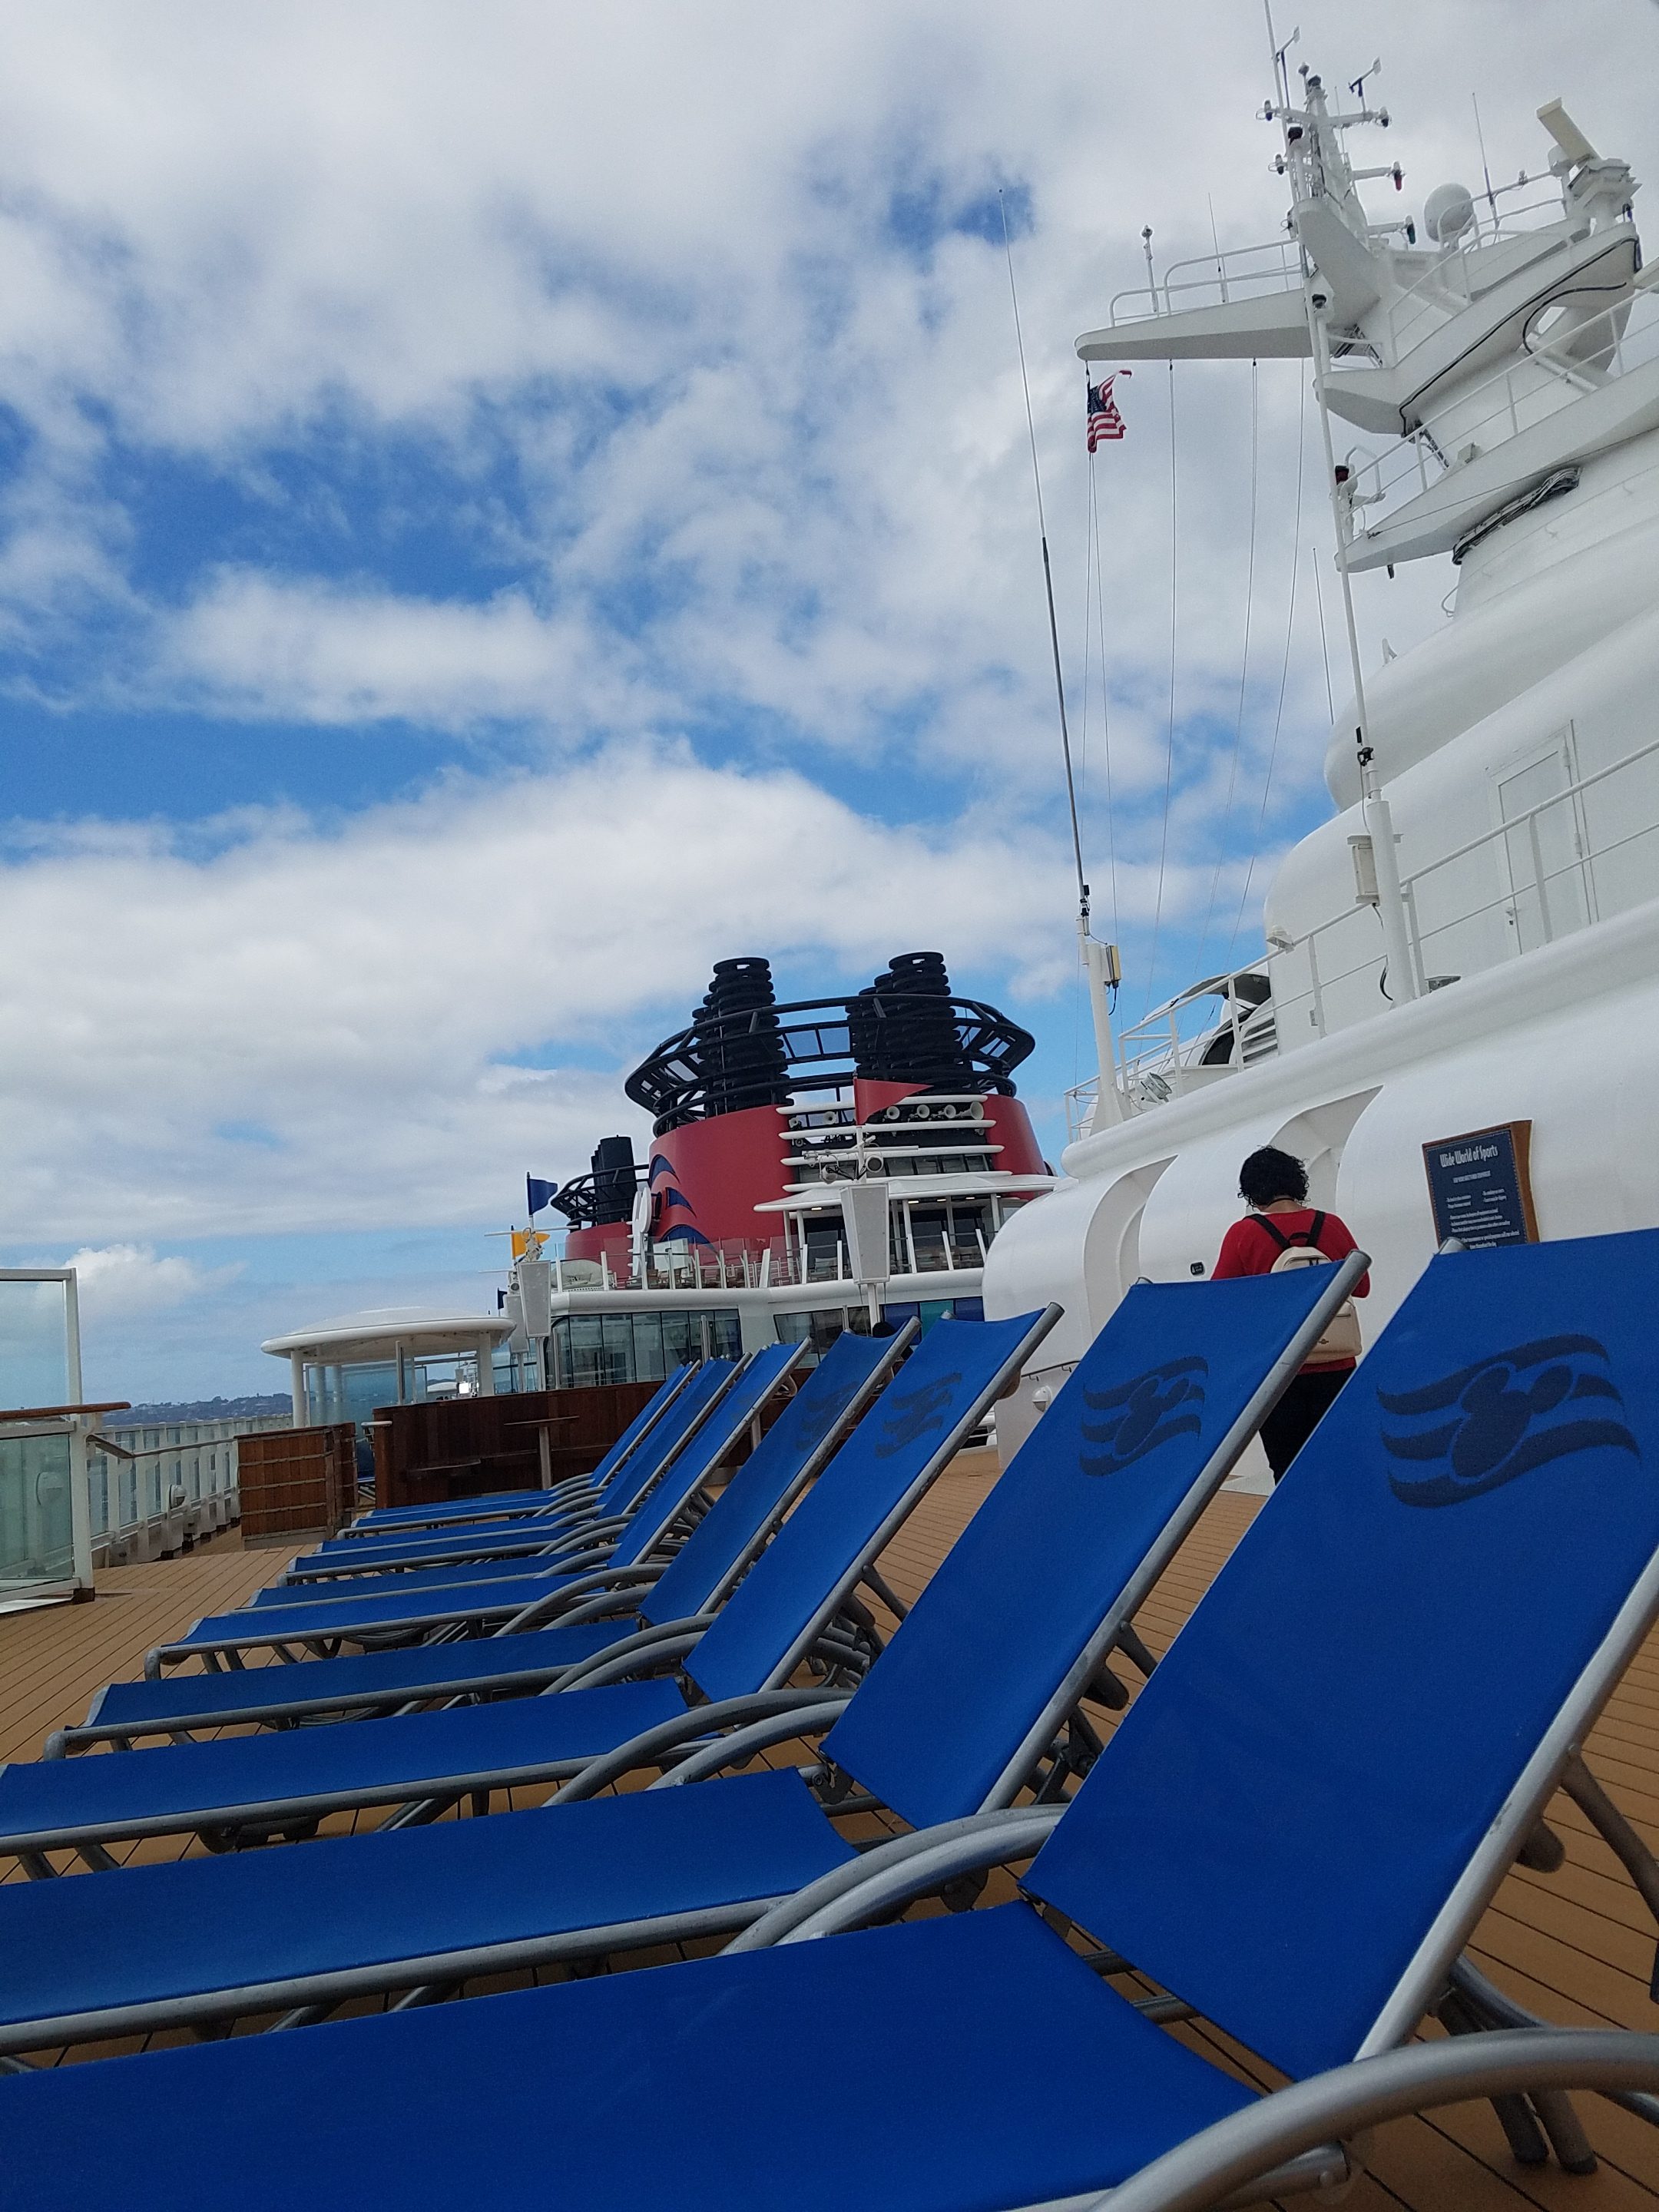 cruise ship lounge chairs